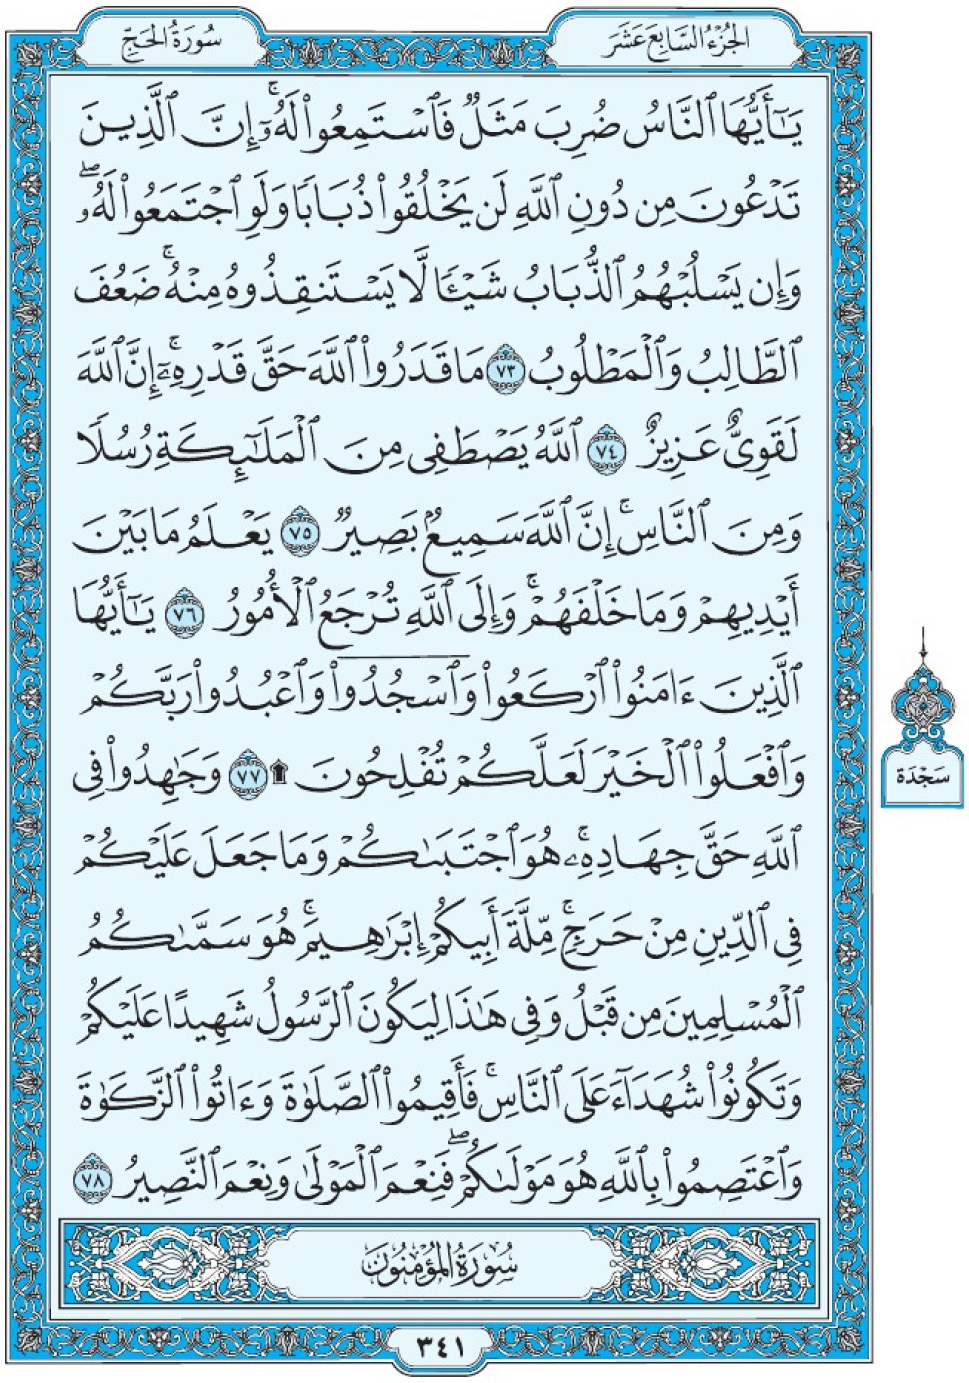 Коран Мединский мусхаф страница 341, Аль-Хадж, аят 73-78